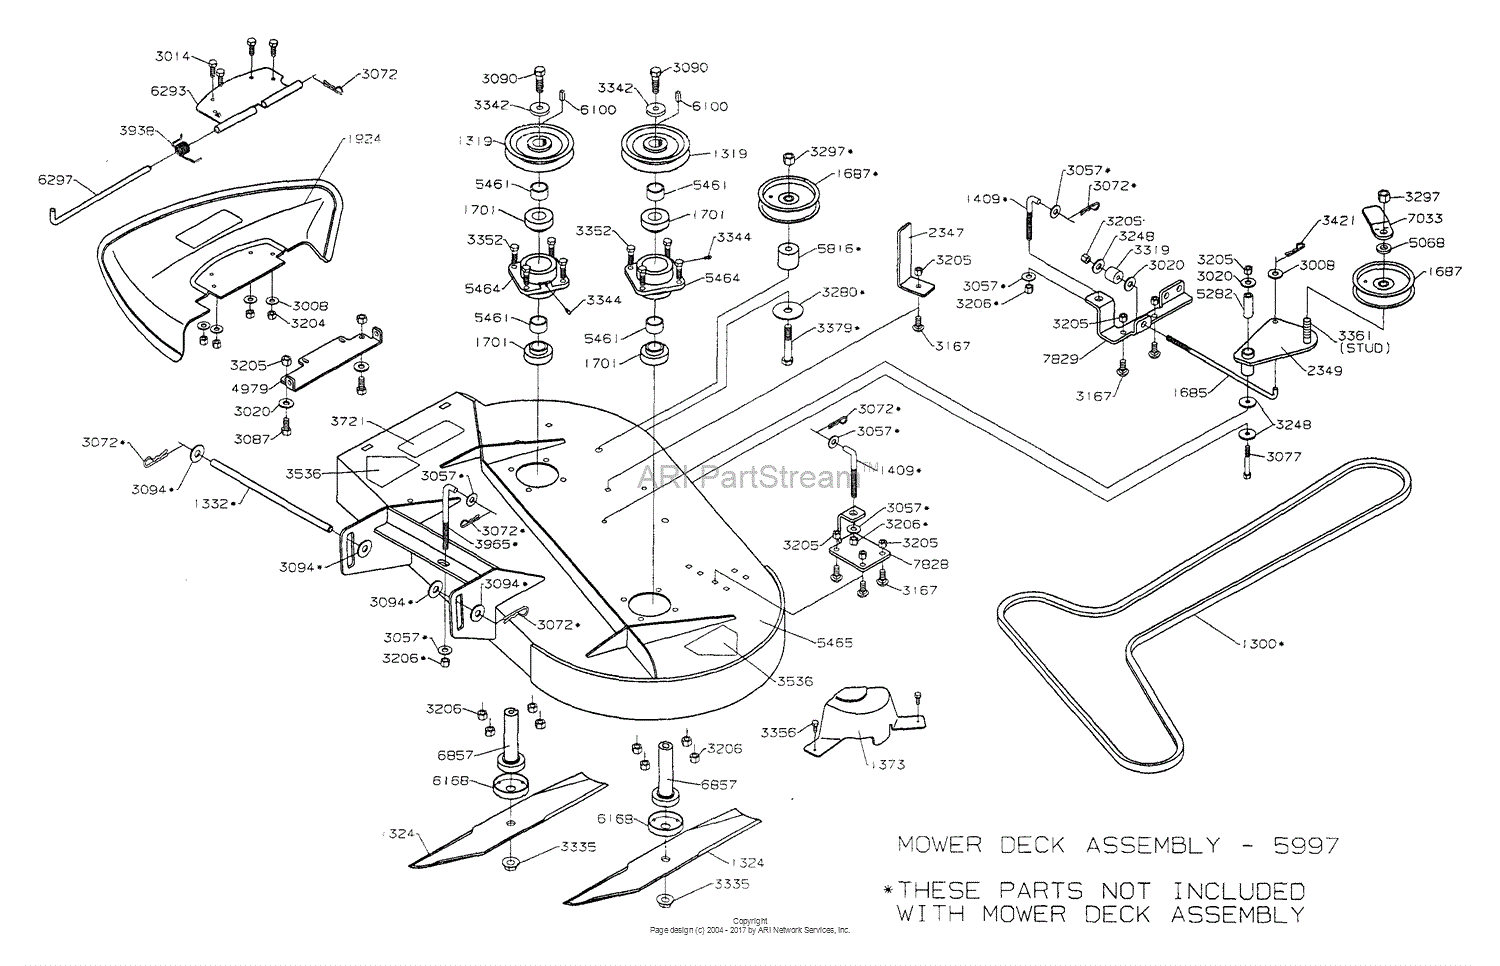 https://az417944.vo.msecnd.net/diagrams/manufacturer/dixon/zero-turn-consumer/ztr-4516k-1999/mower-deck-36/diagram.gif